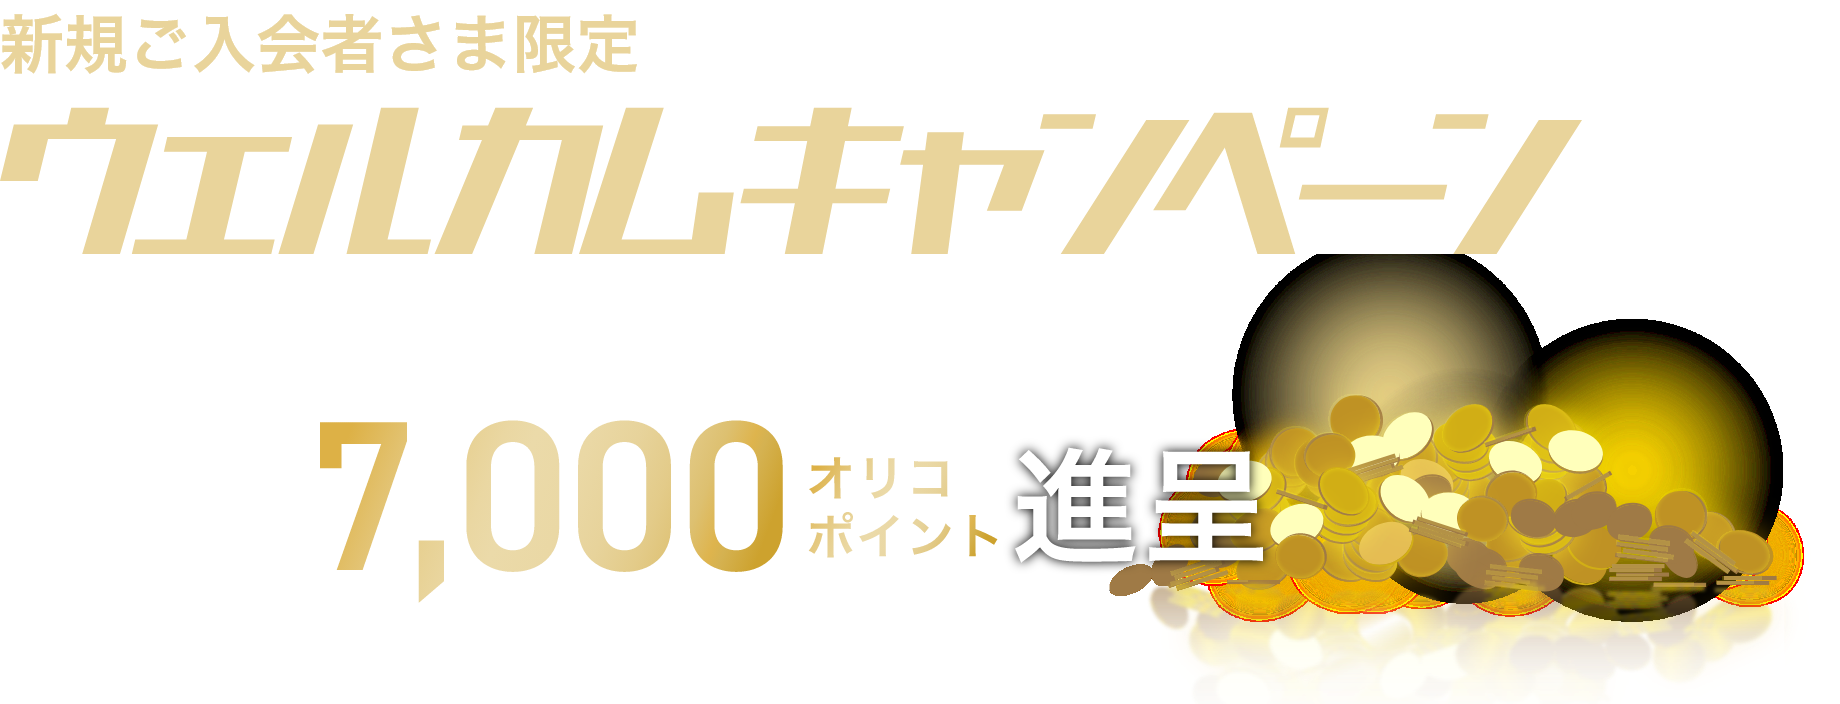 Kawasaki/KAZE/Oricoカード ポイントシミュレーション